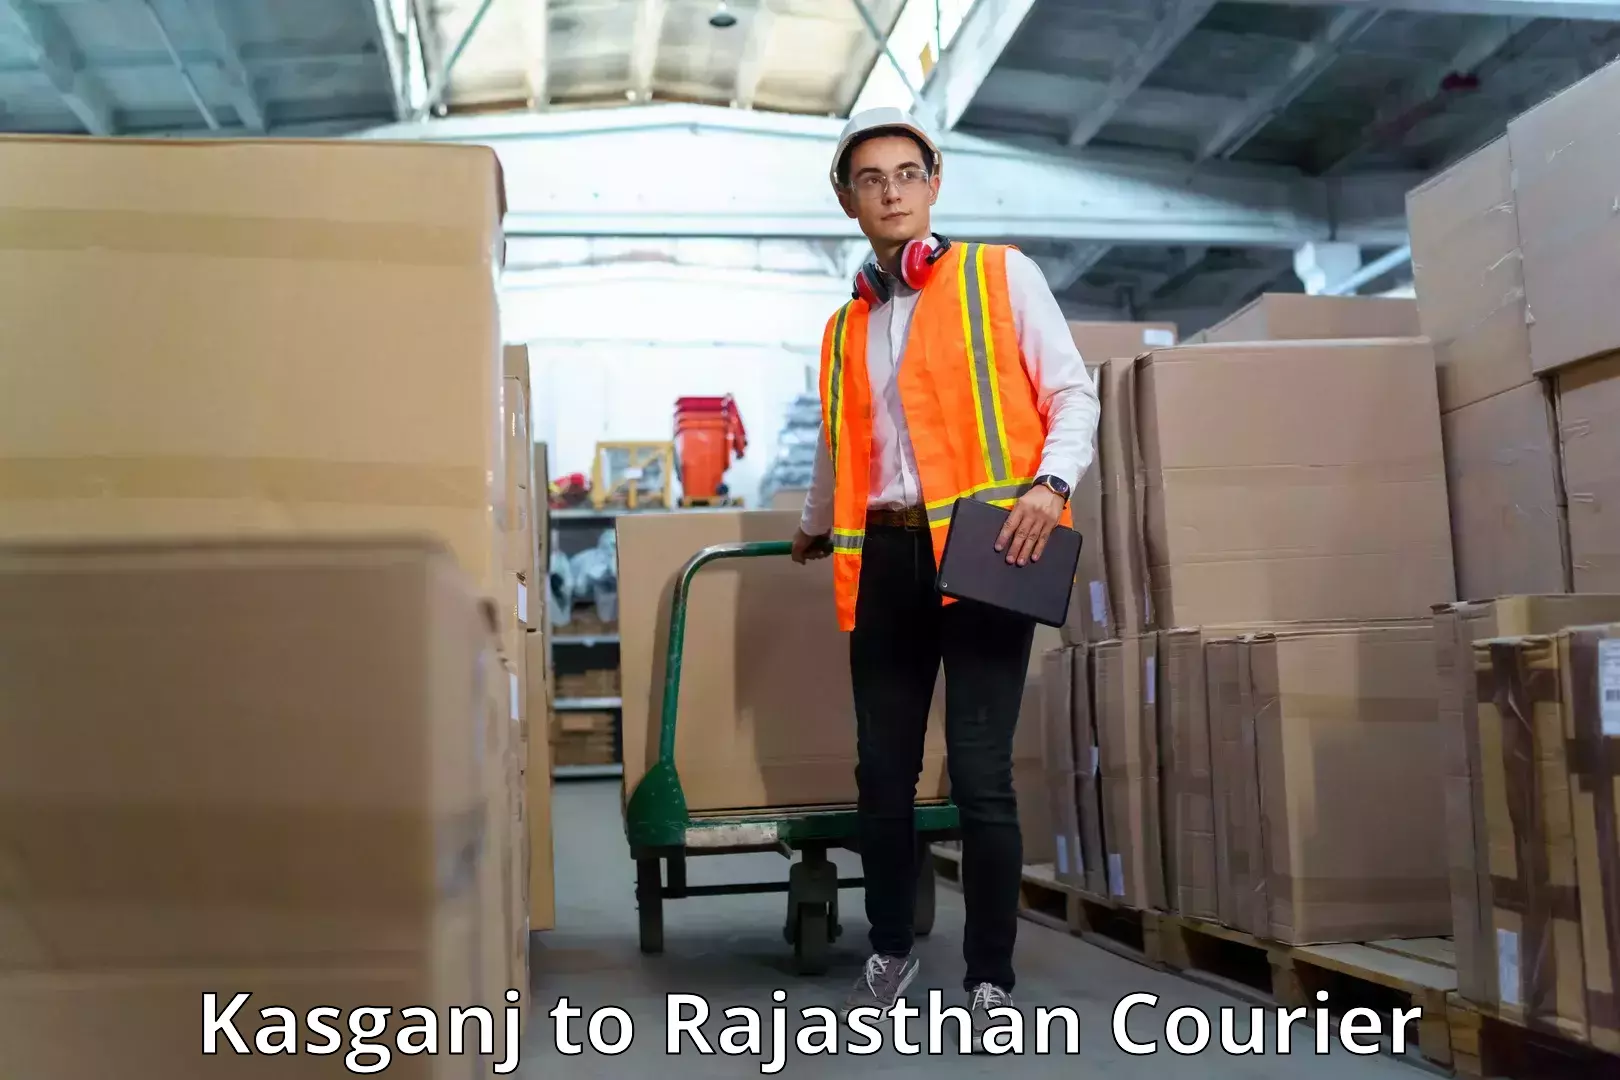 Nationwide delivery network Kasganj to Rajasthan